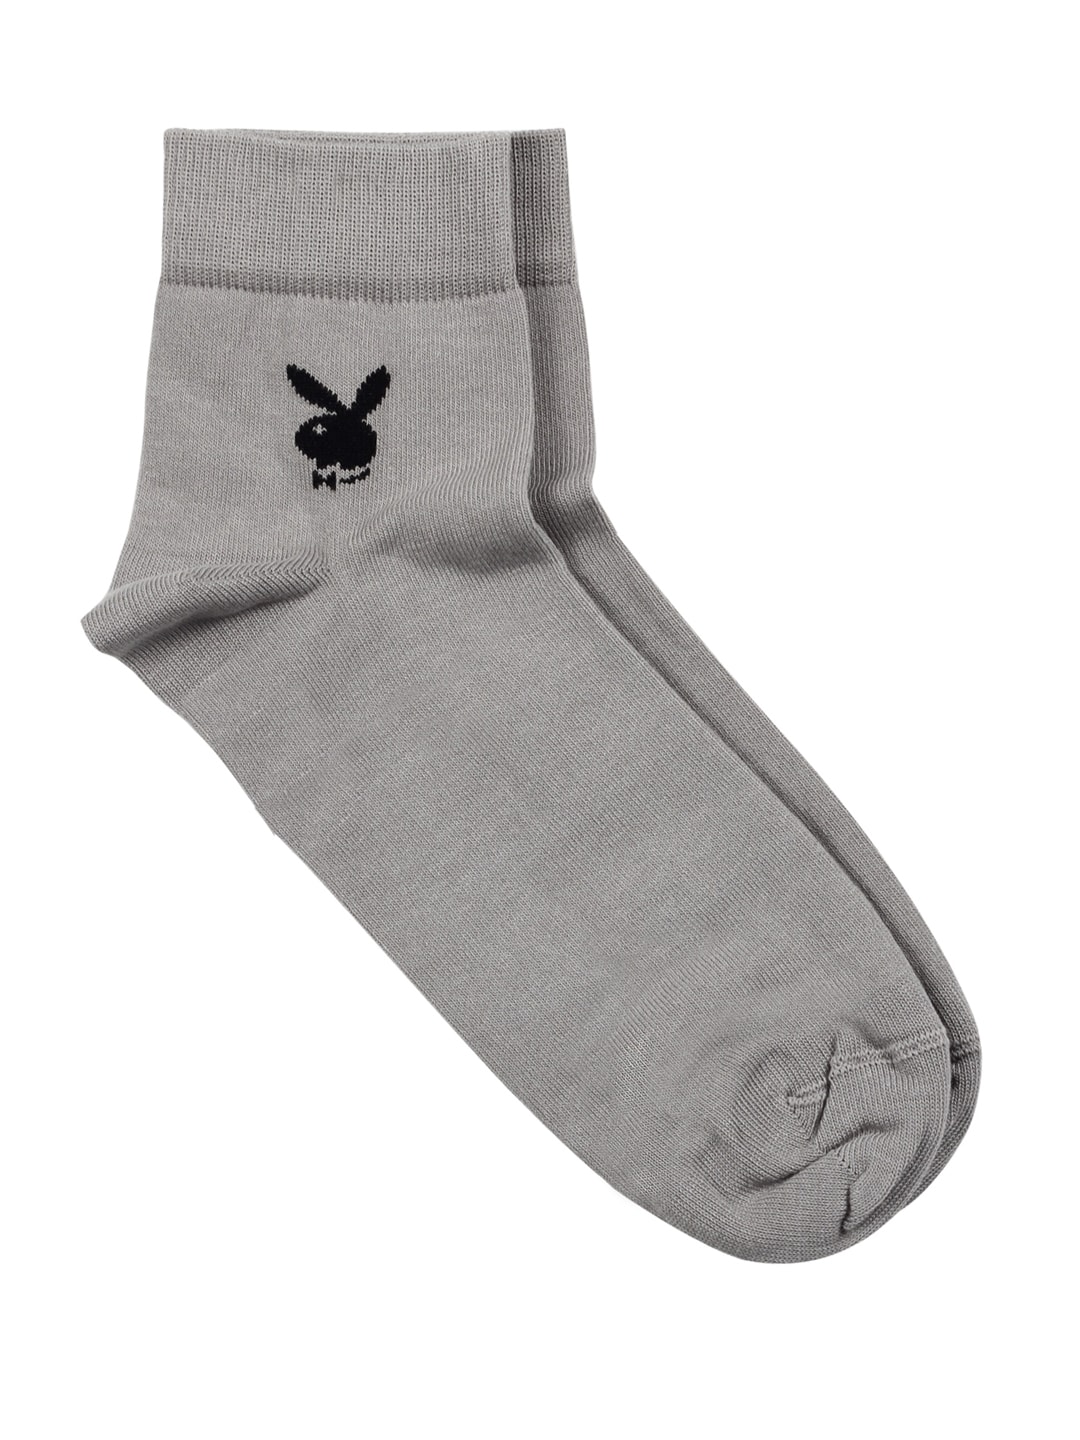 Playboy Men Grey Socks